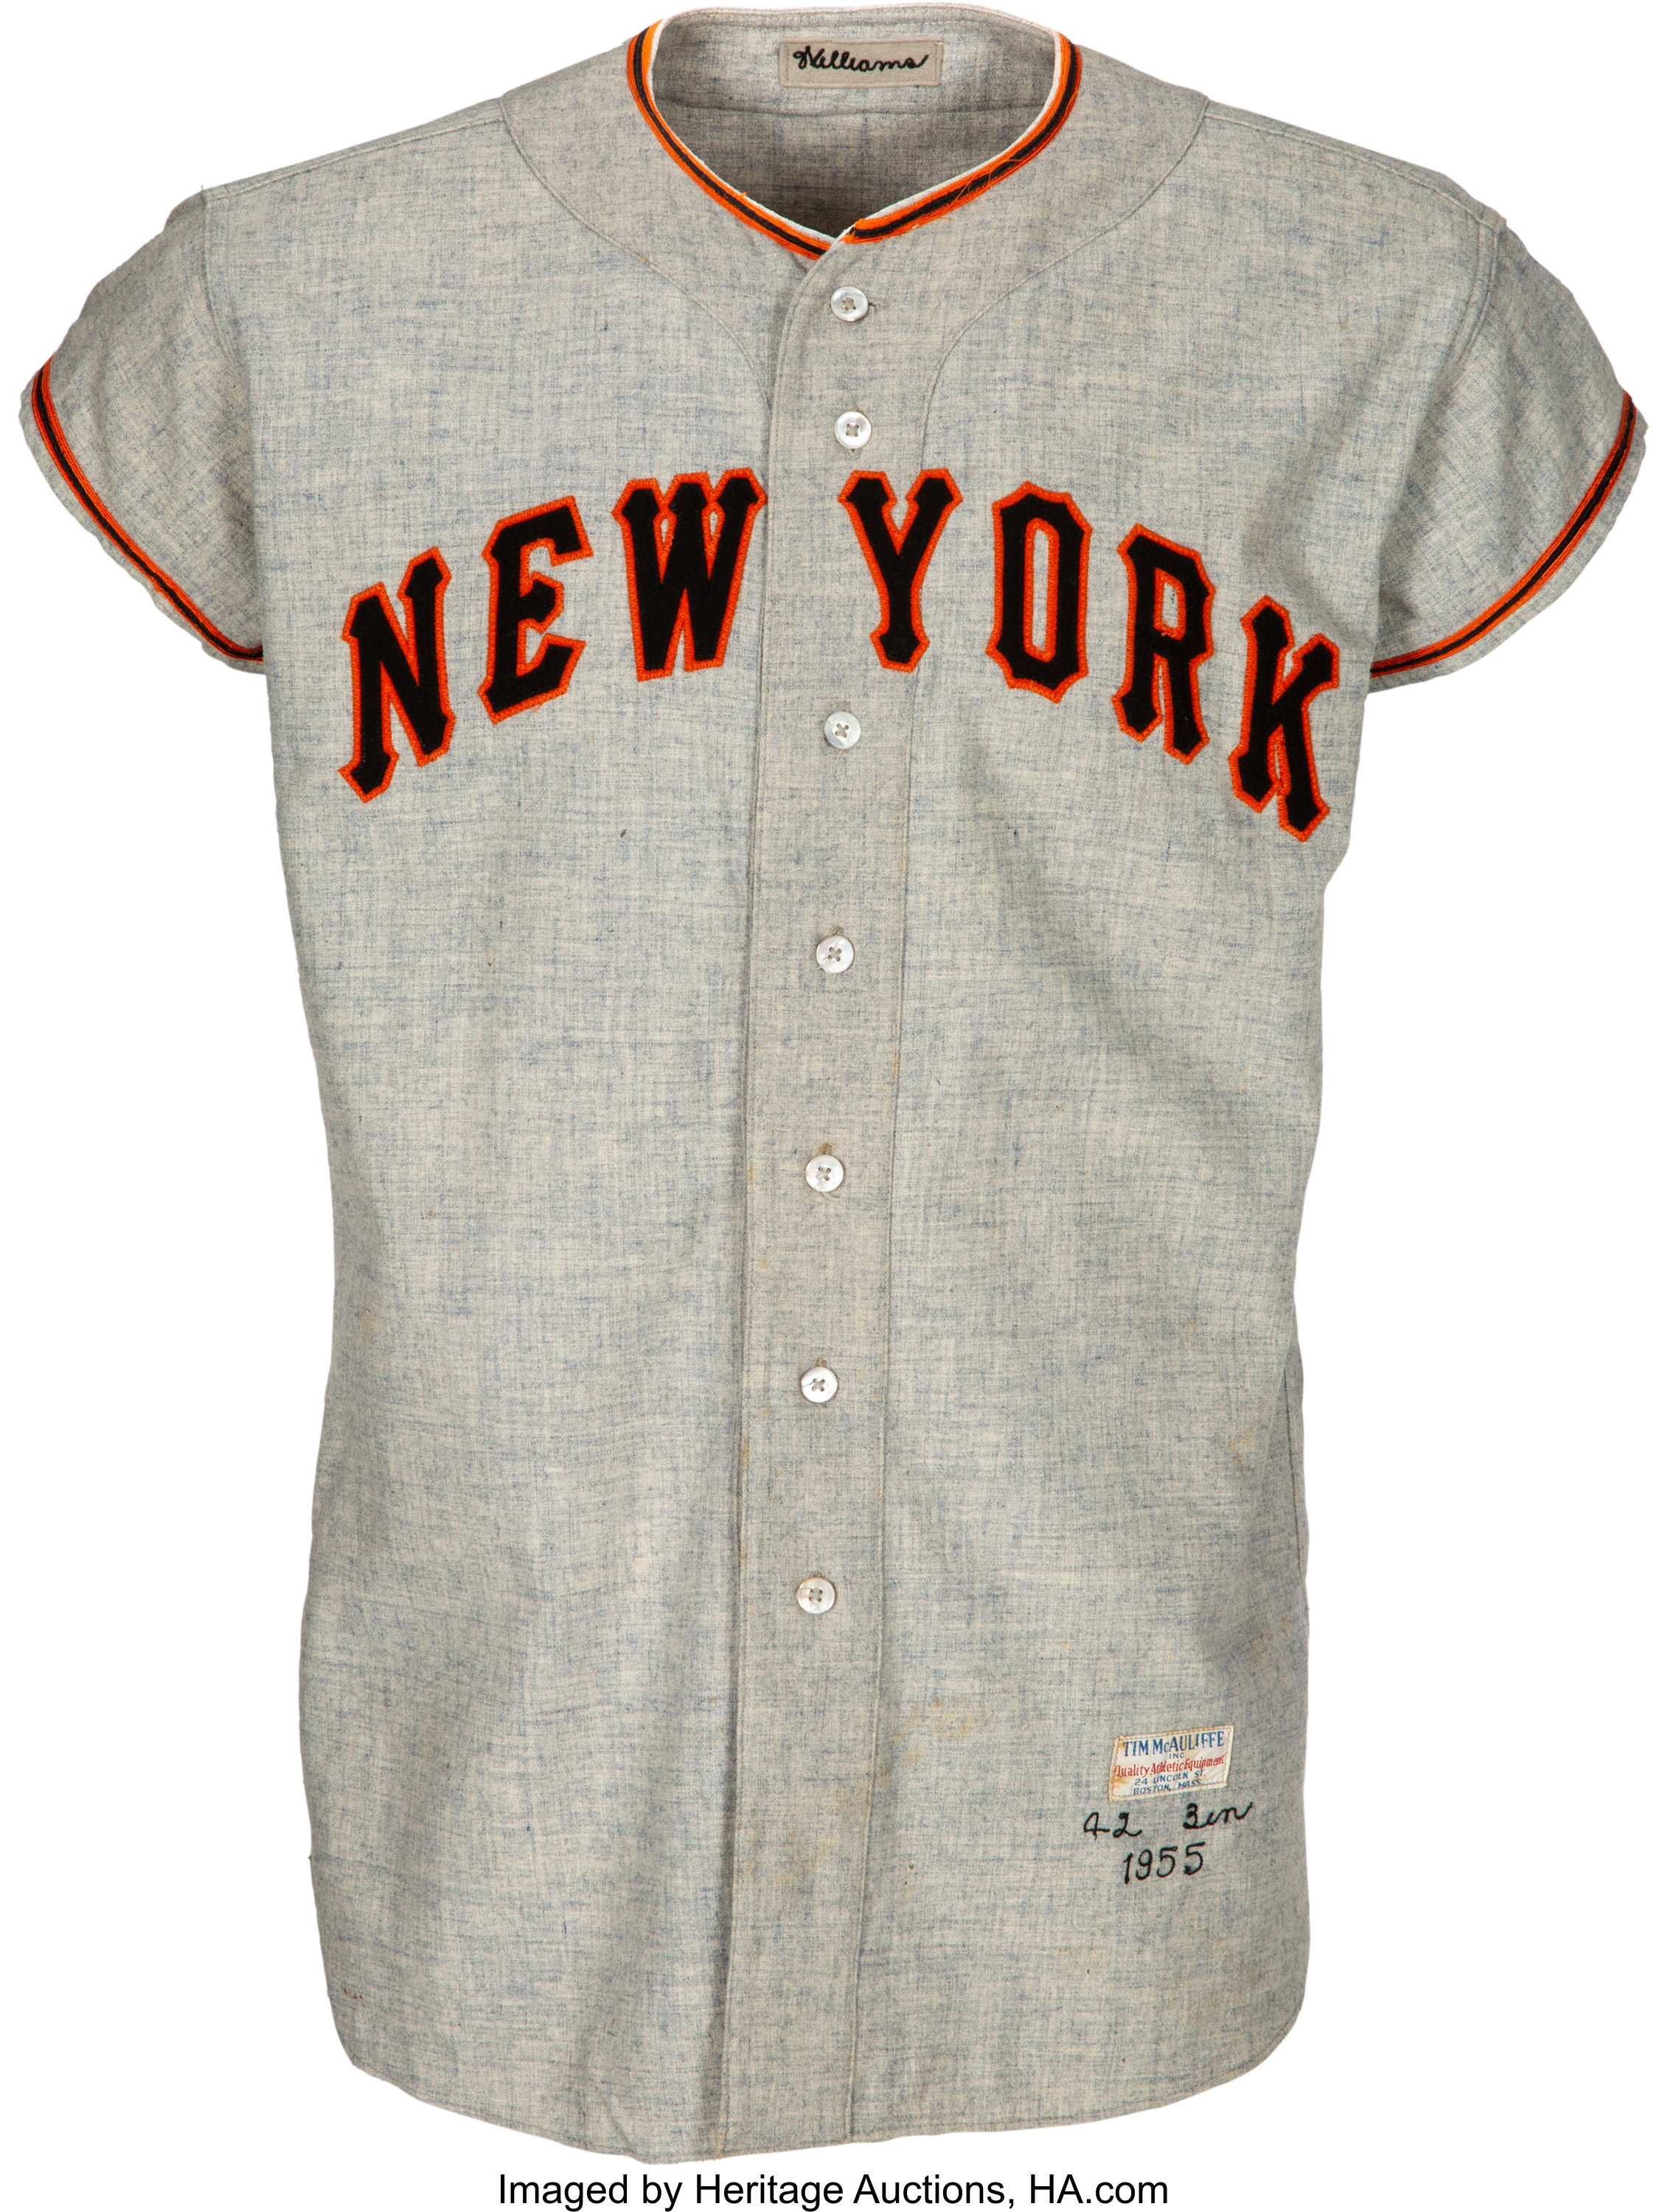 1954-55 Davey Williams Game Worn New York Giants Uniform. , Lot #50708